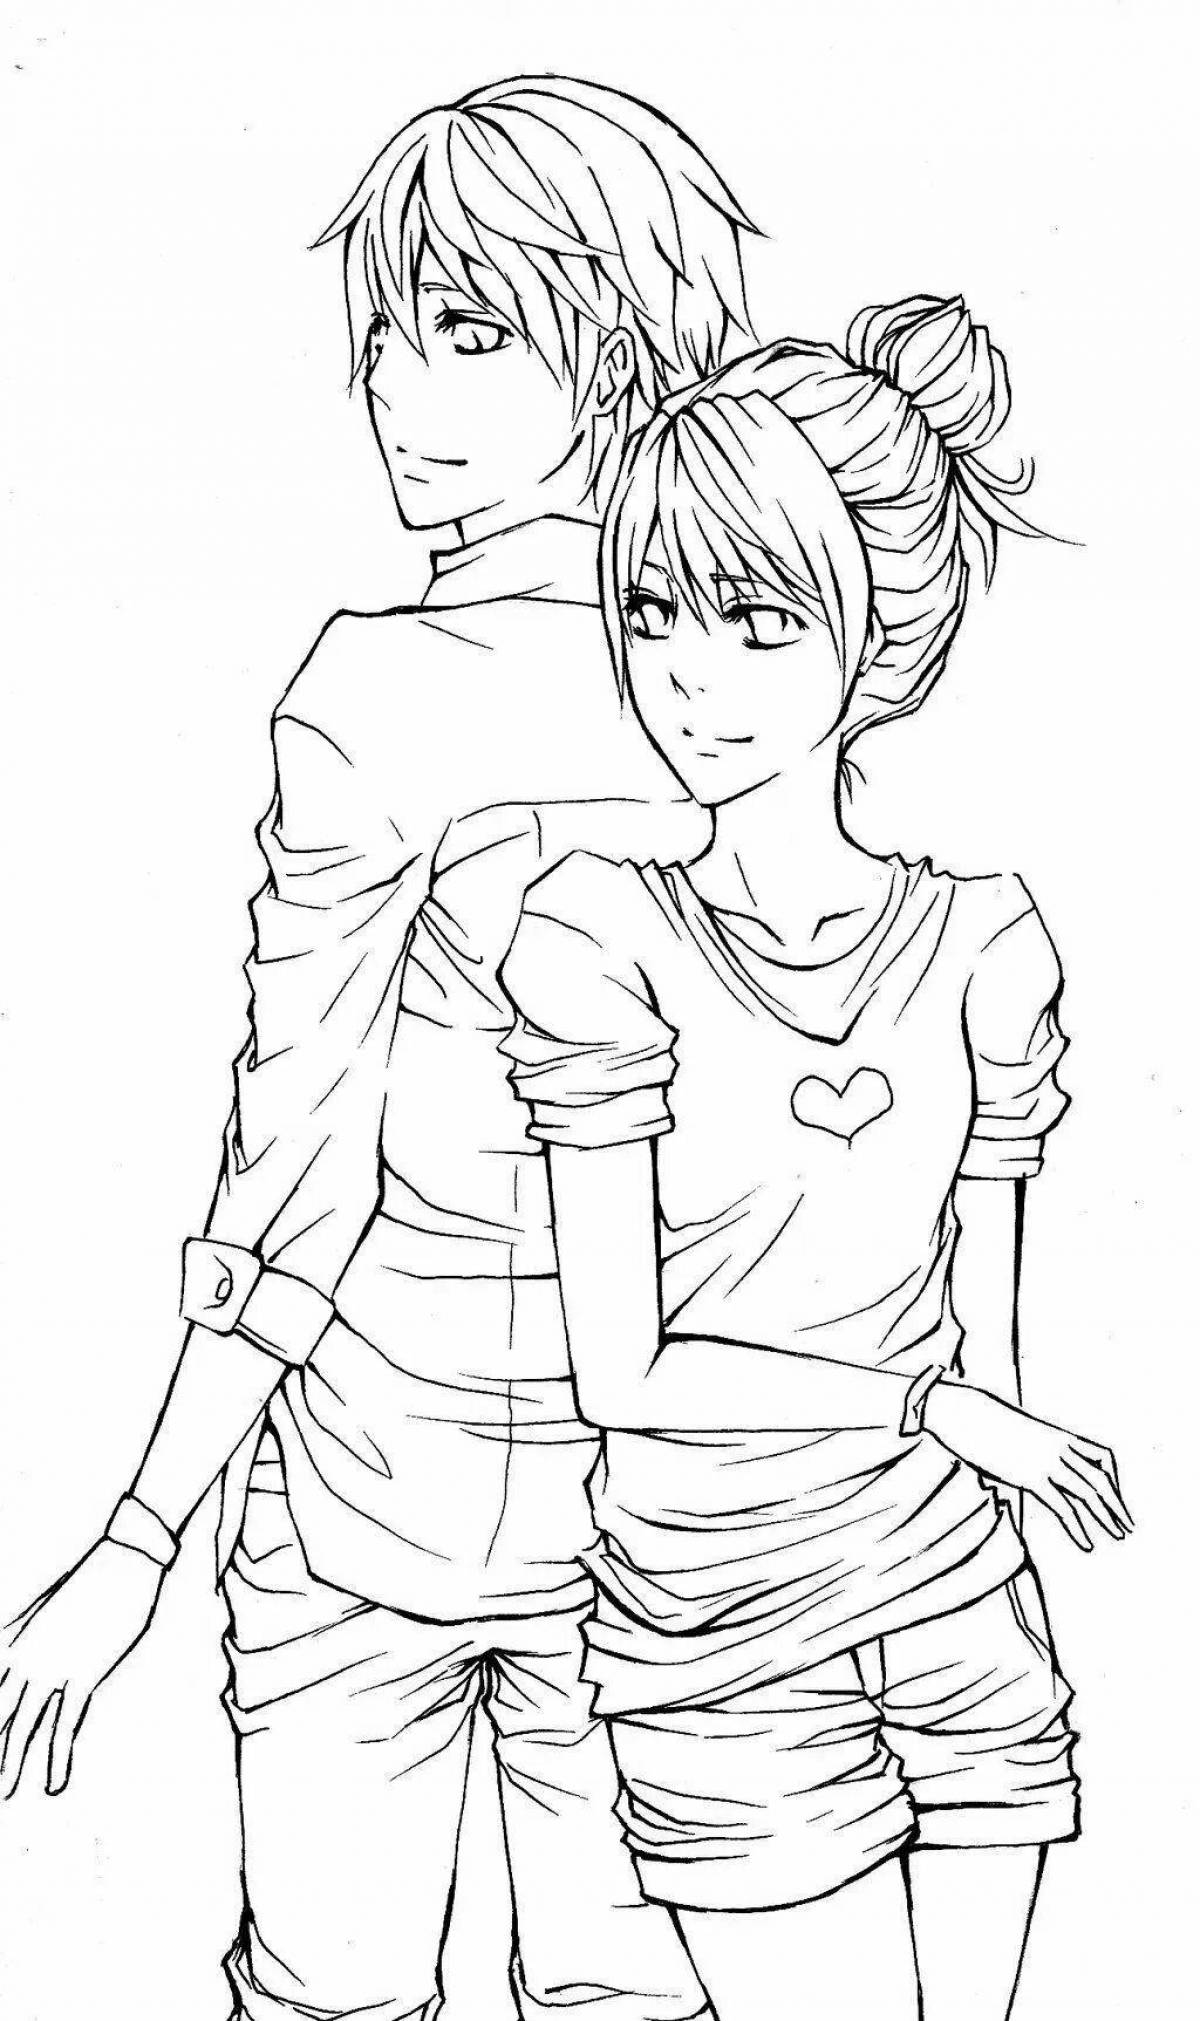 Joyful anime boy and girl coloring book